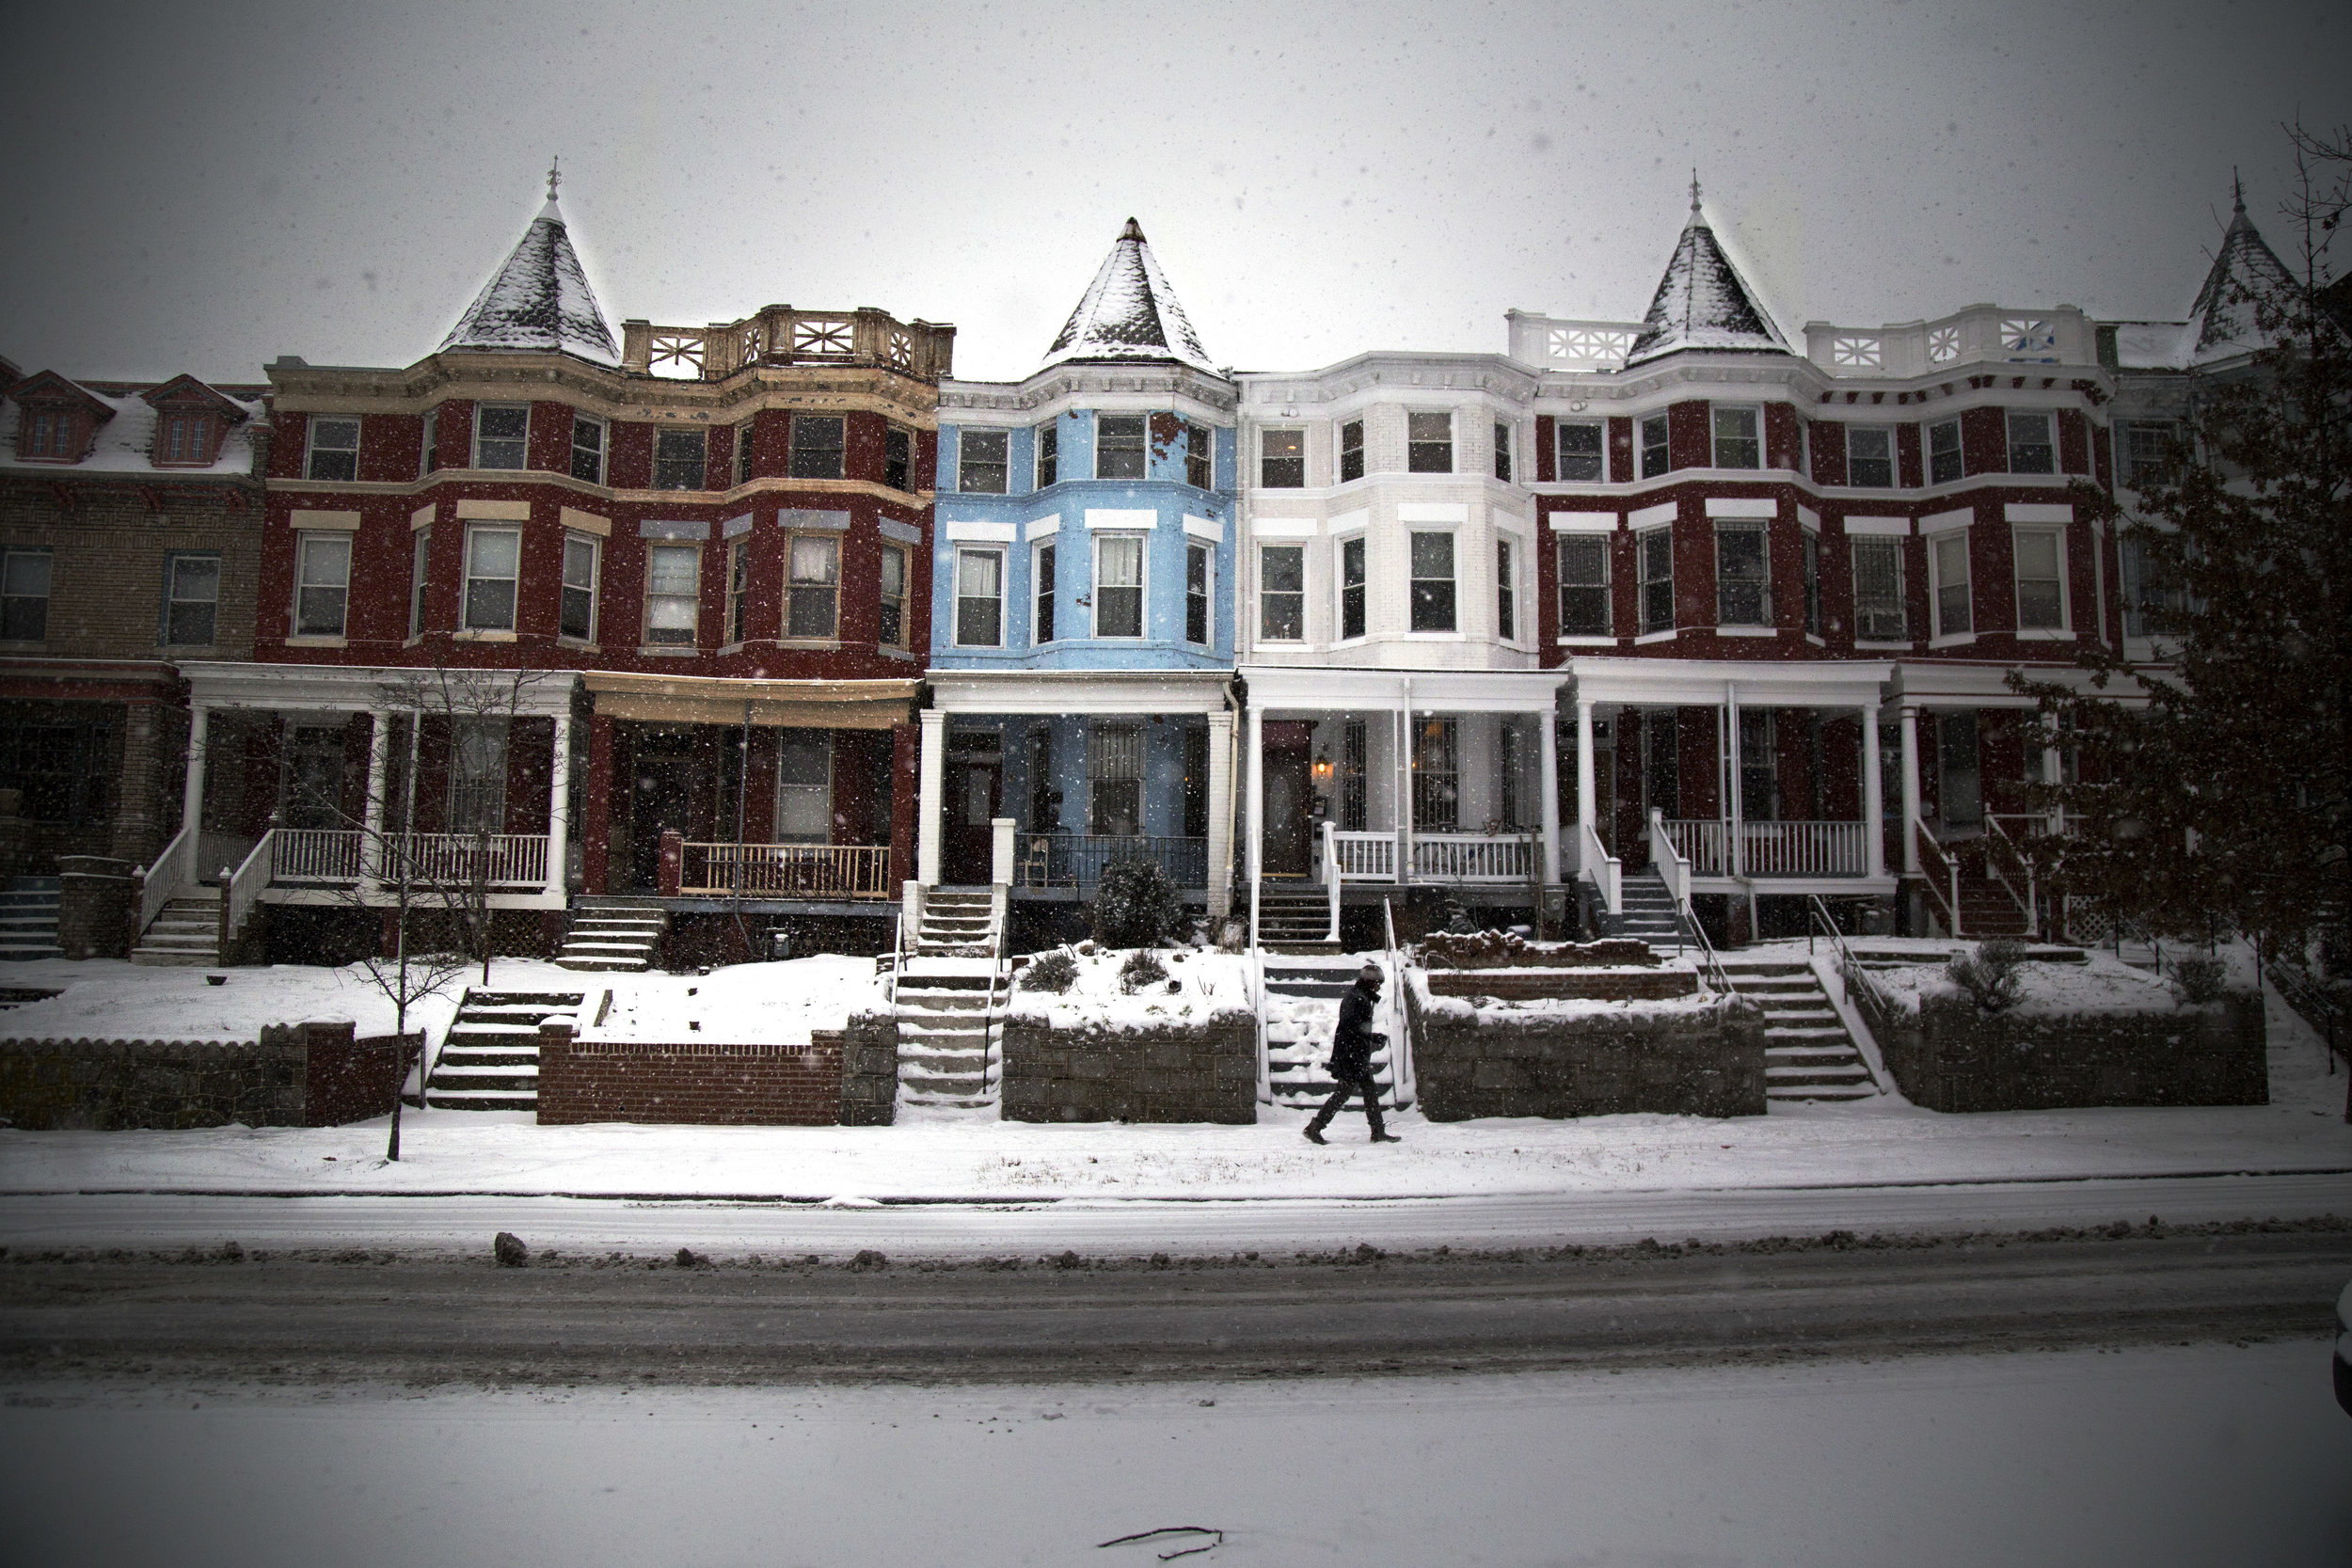  WASHINGTON, D.C. Snowpocalypse 2016.  